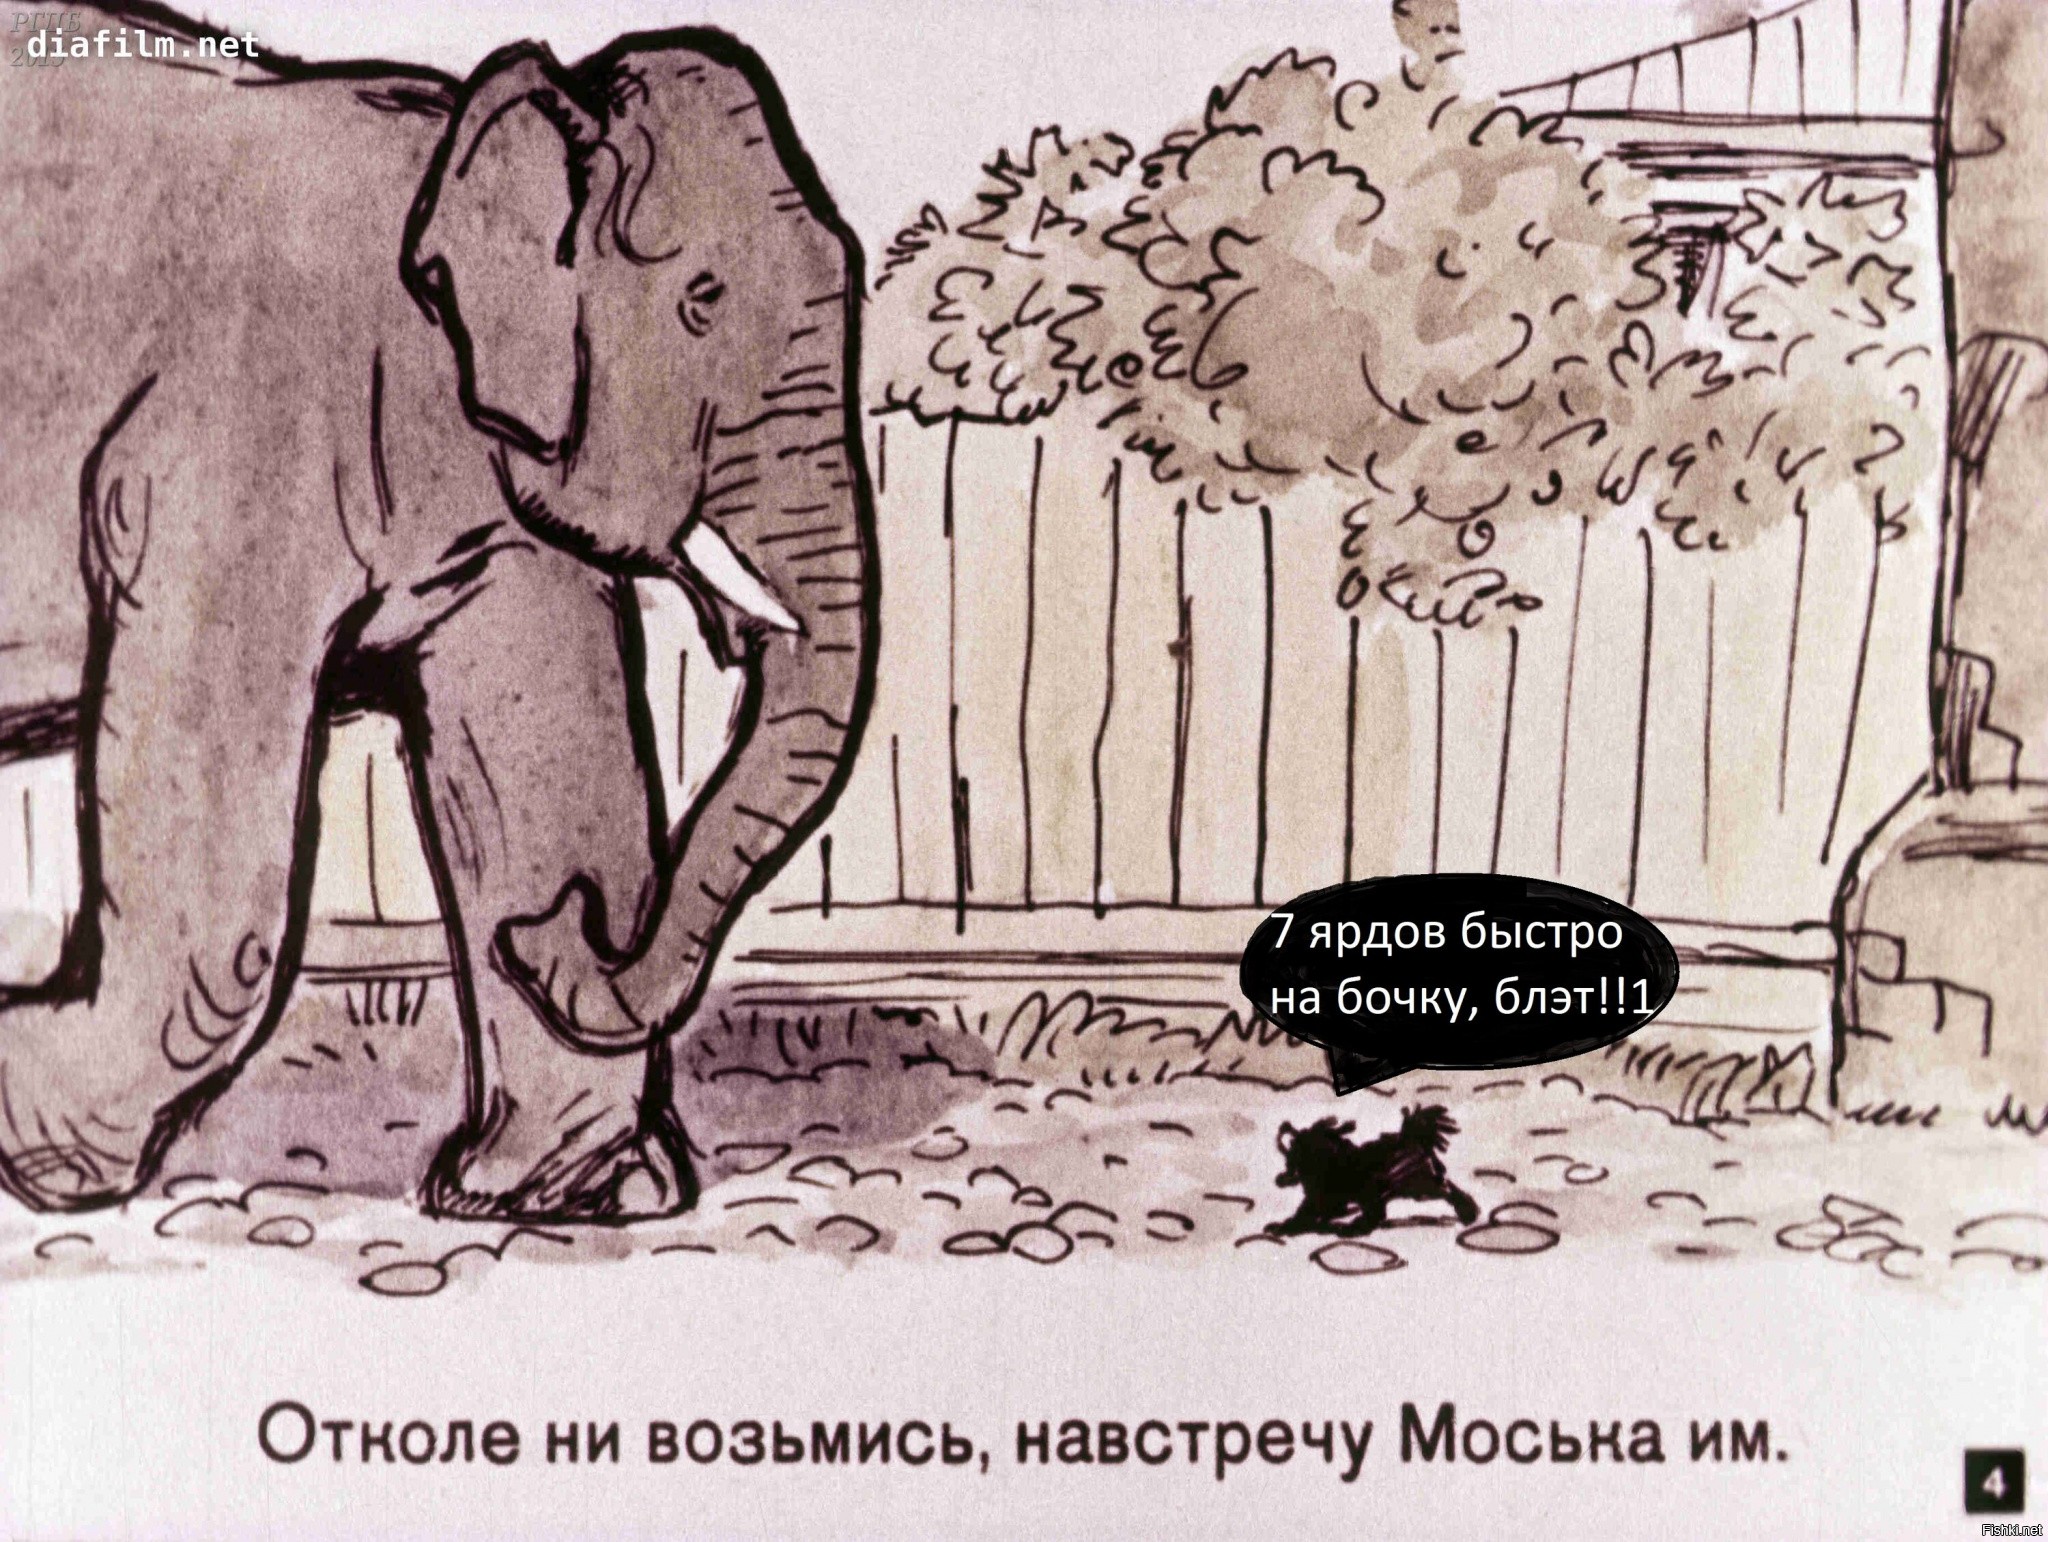 Слон и моська автор. Басня Крылова слон и моська. Иллюстрация к басне слон и моська. Басня слон и моська Крылов.